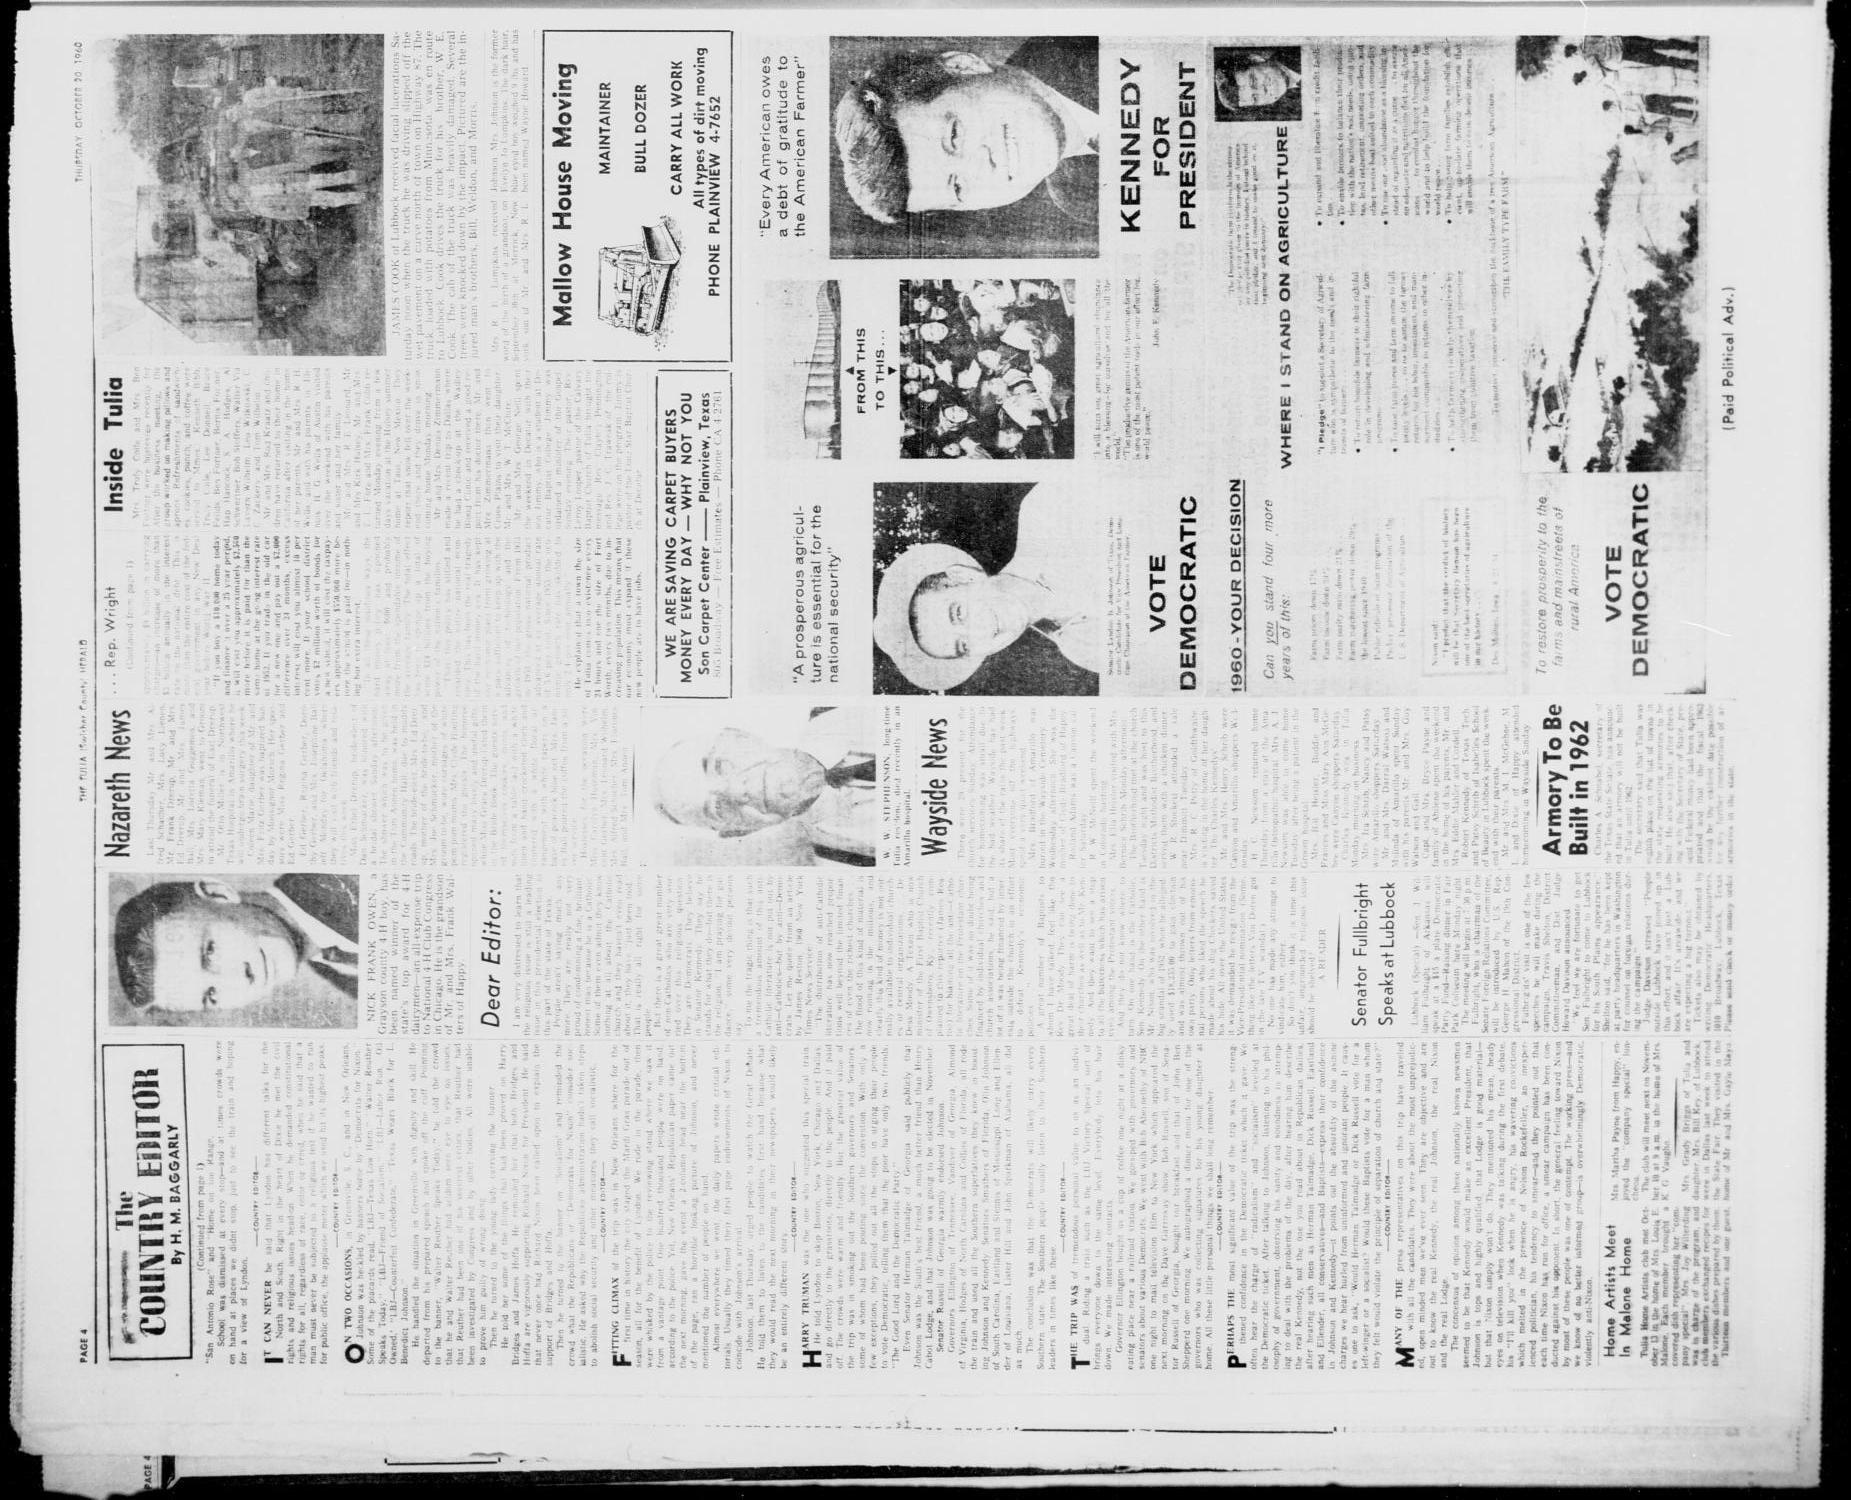 The Tulia Herald (Tulia, Tex), Vol. 51, No. 42, Ed. 1, Thursday, October 20, 1960
                                                
                                                    4
                                                